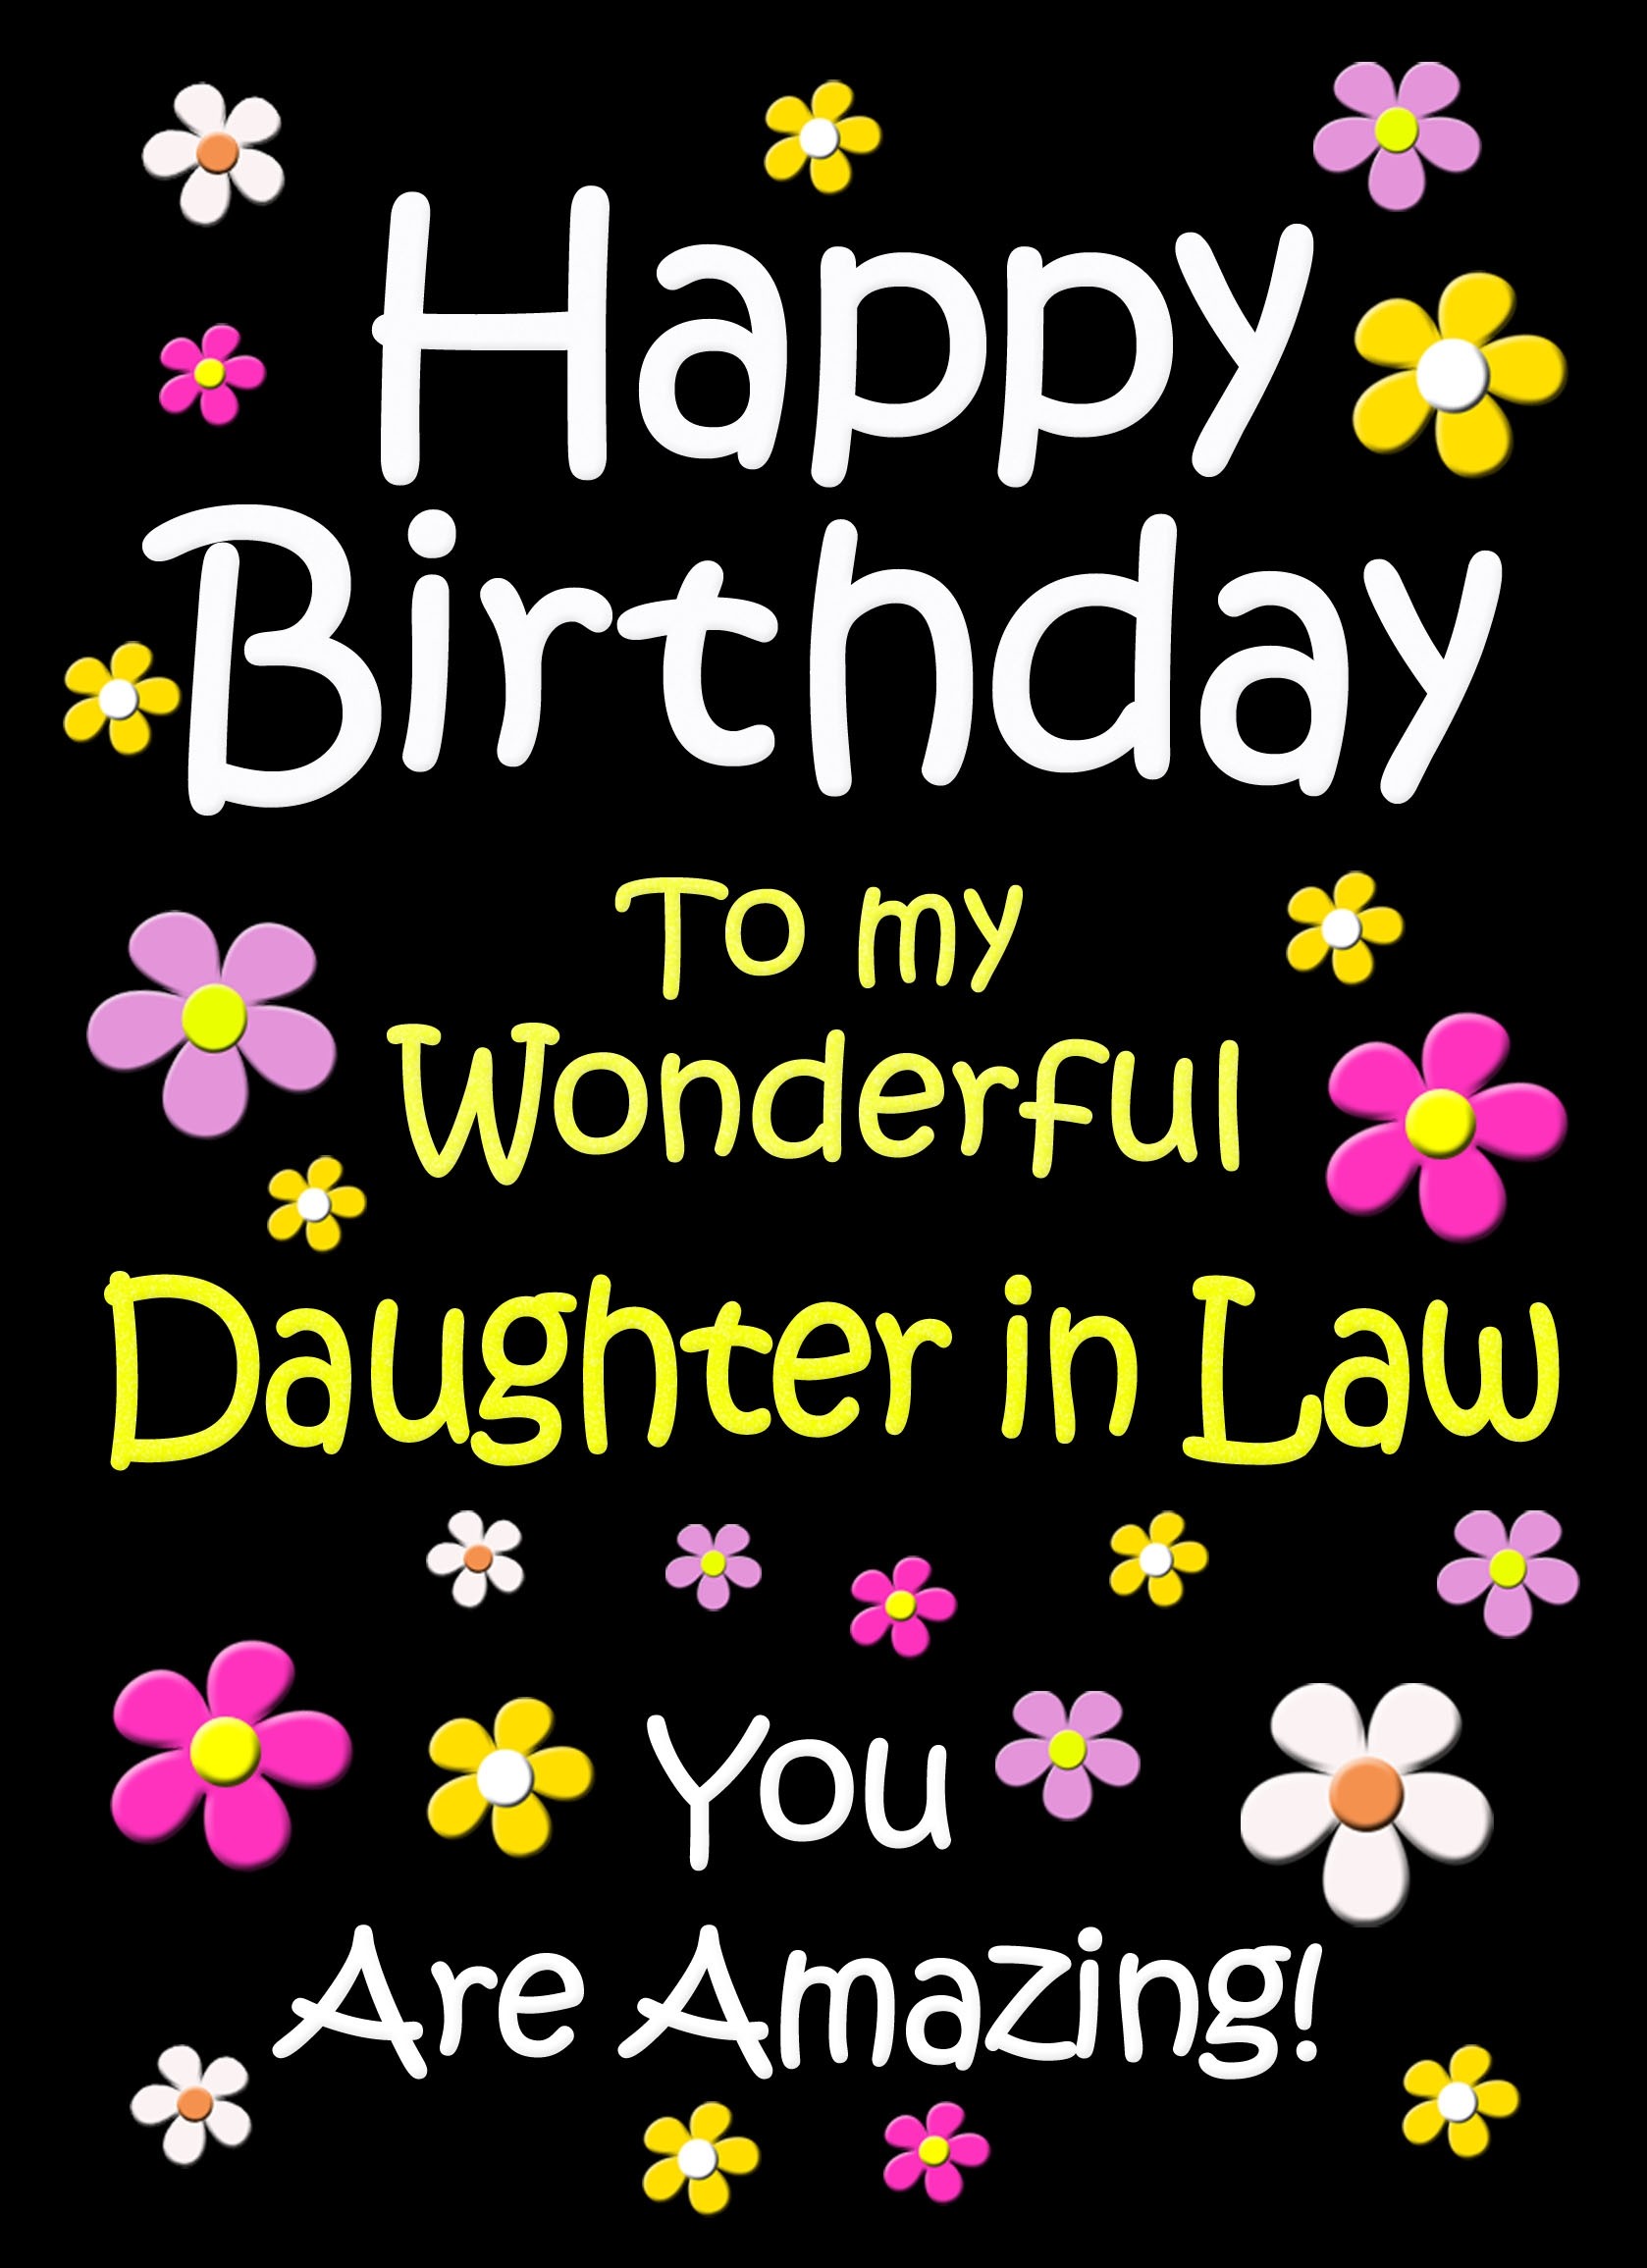 Daughter in Law Birthday Card (Black)